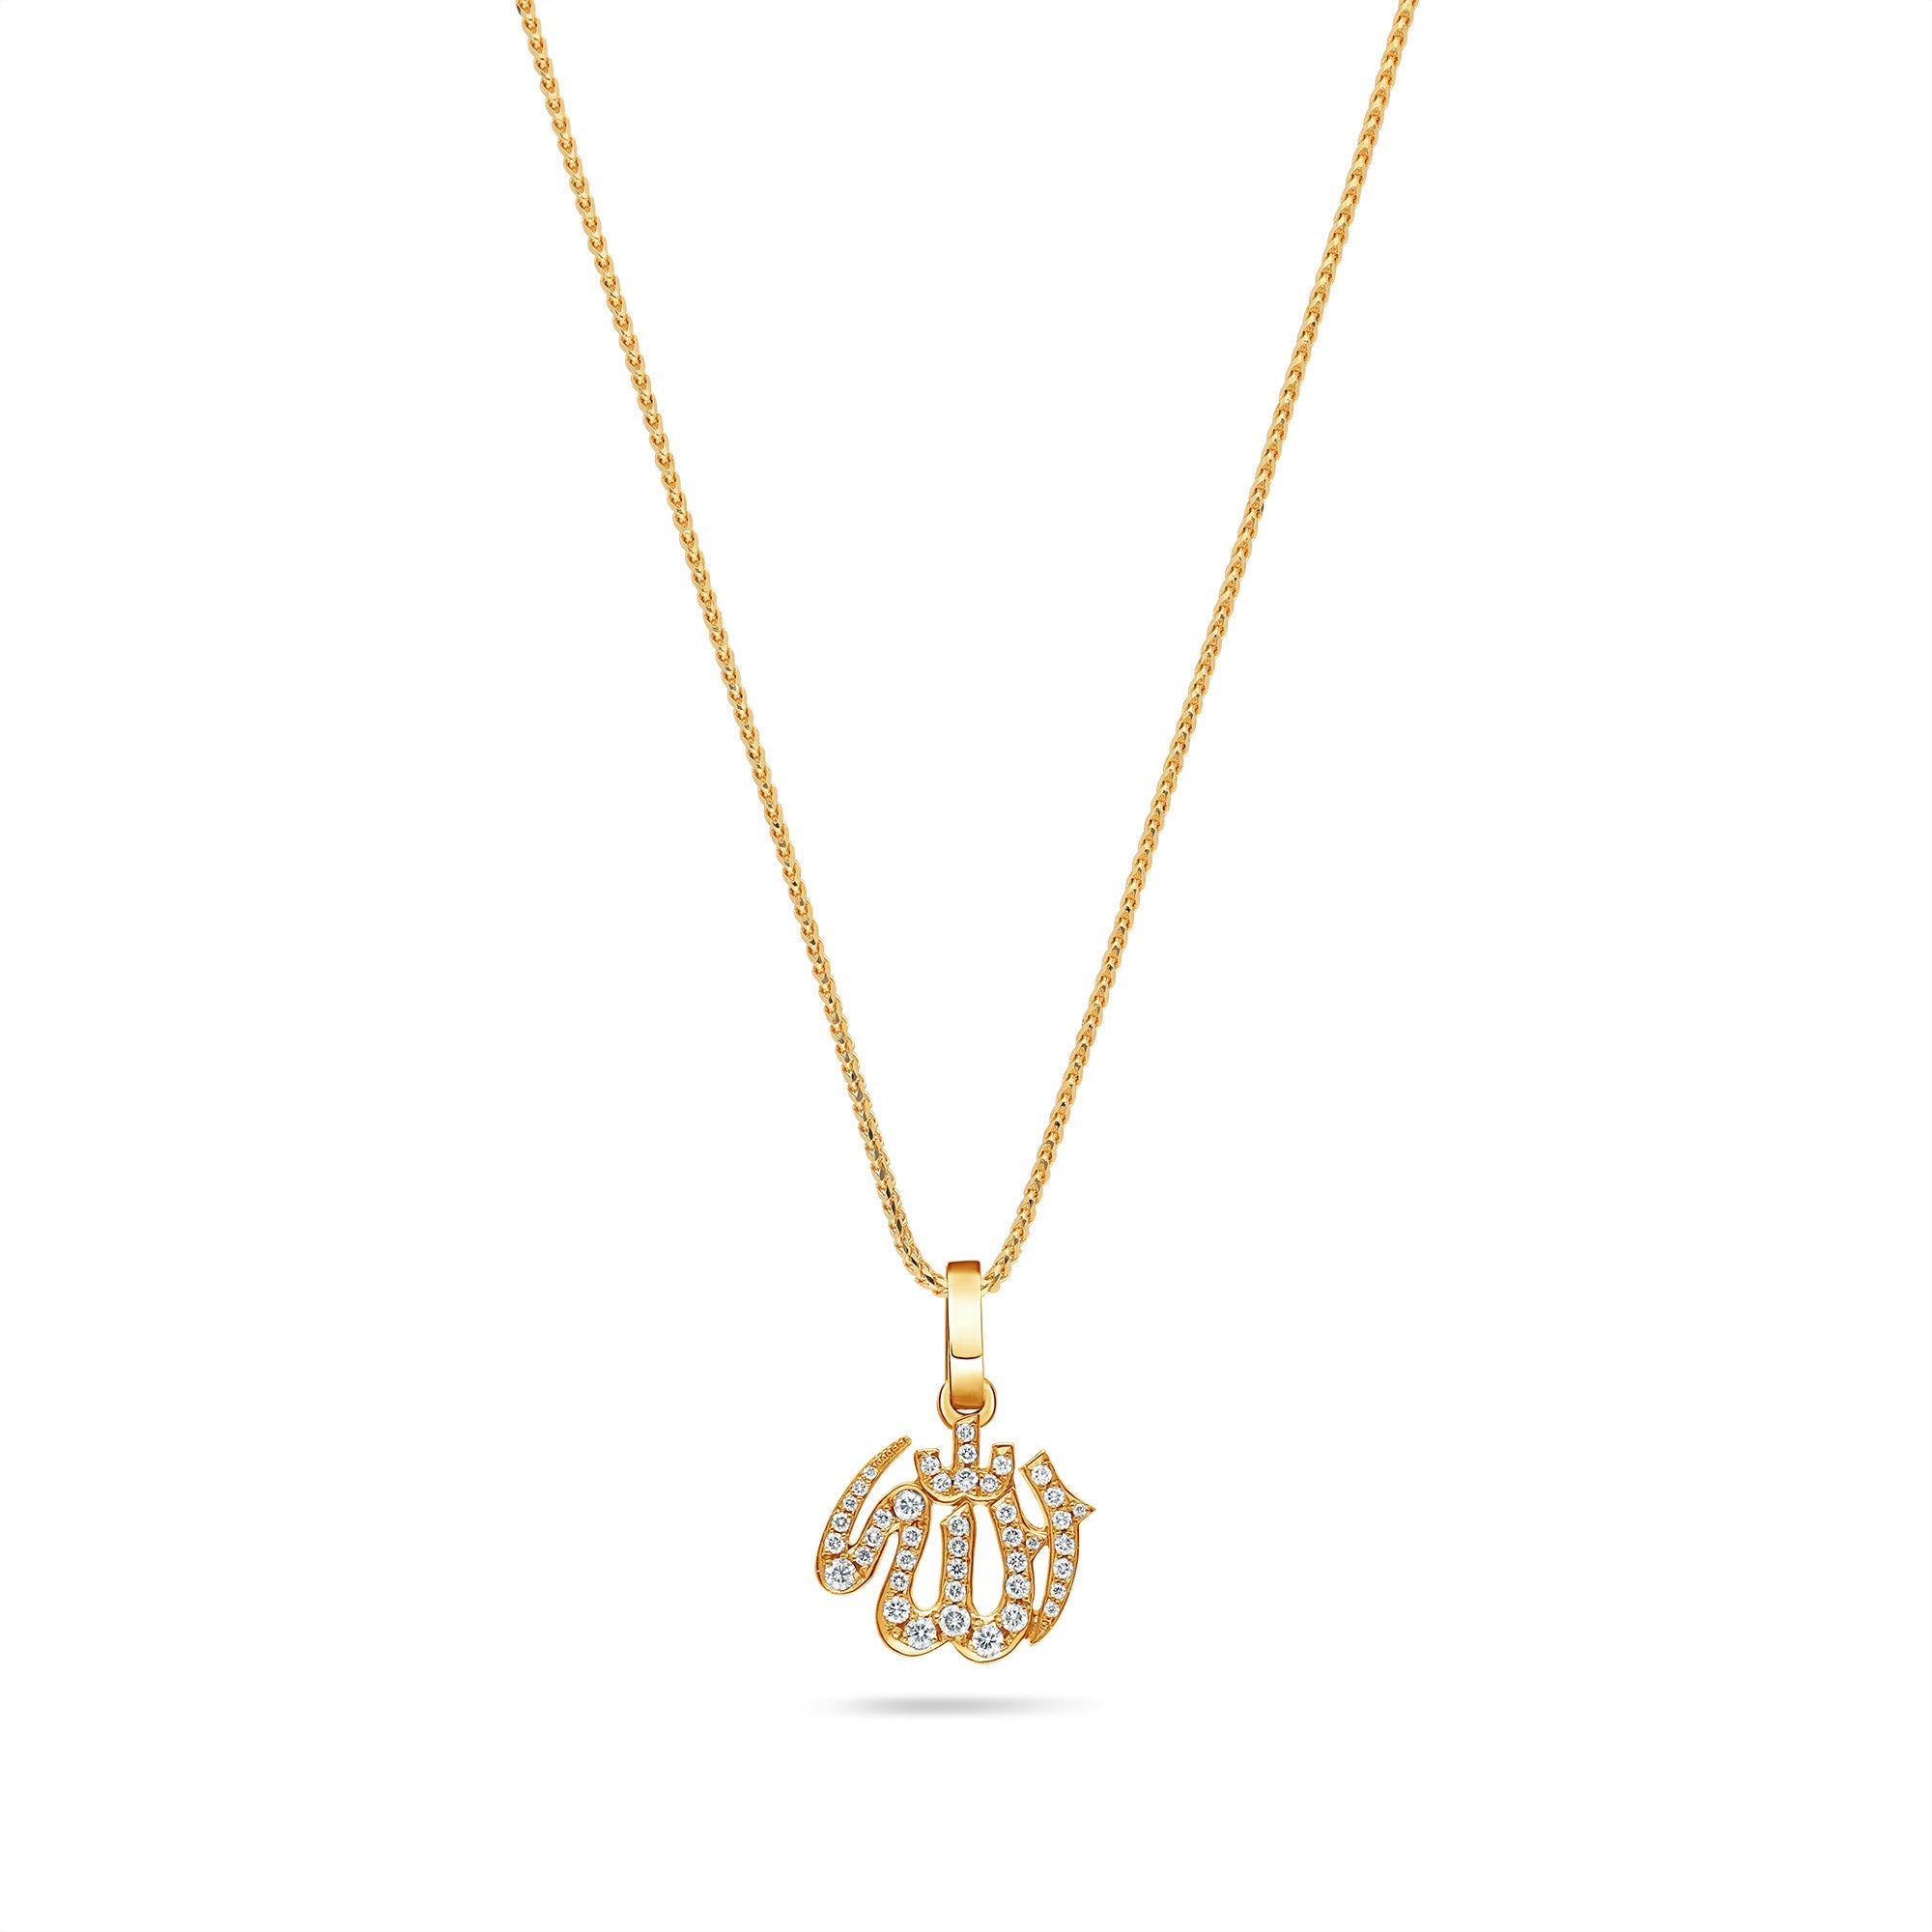 Nano Allah Piece (Fully Iced) (14K YELLOW GOLD) - IF & Co. Custom Jewelers